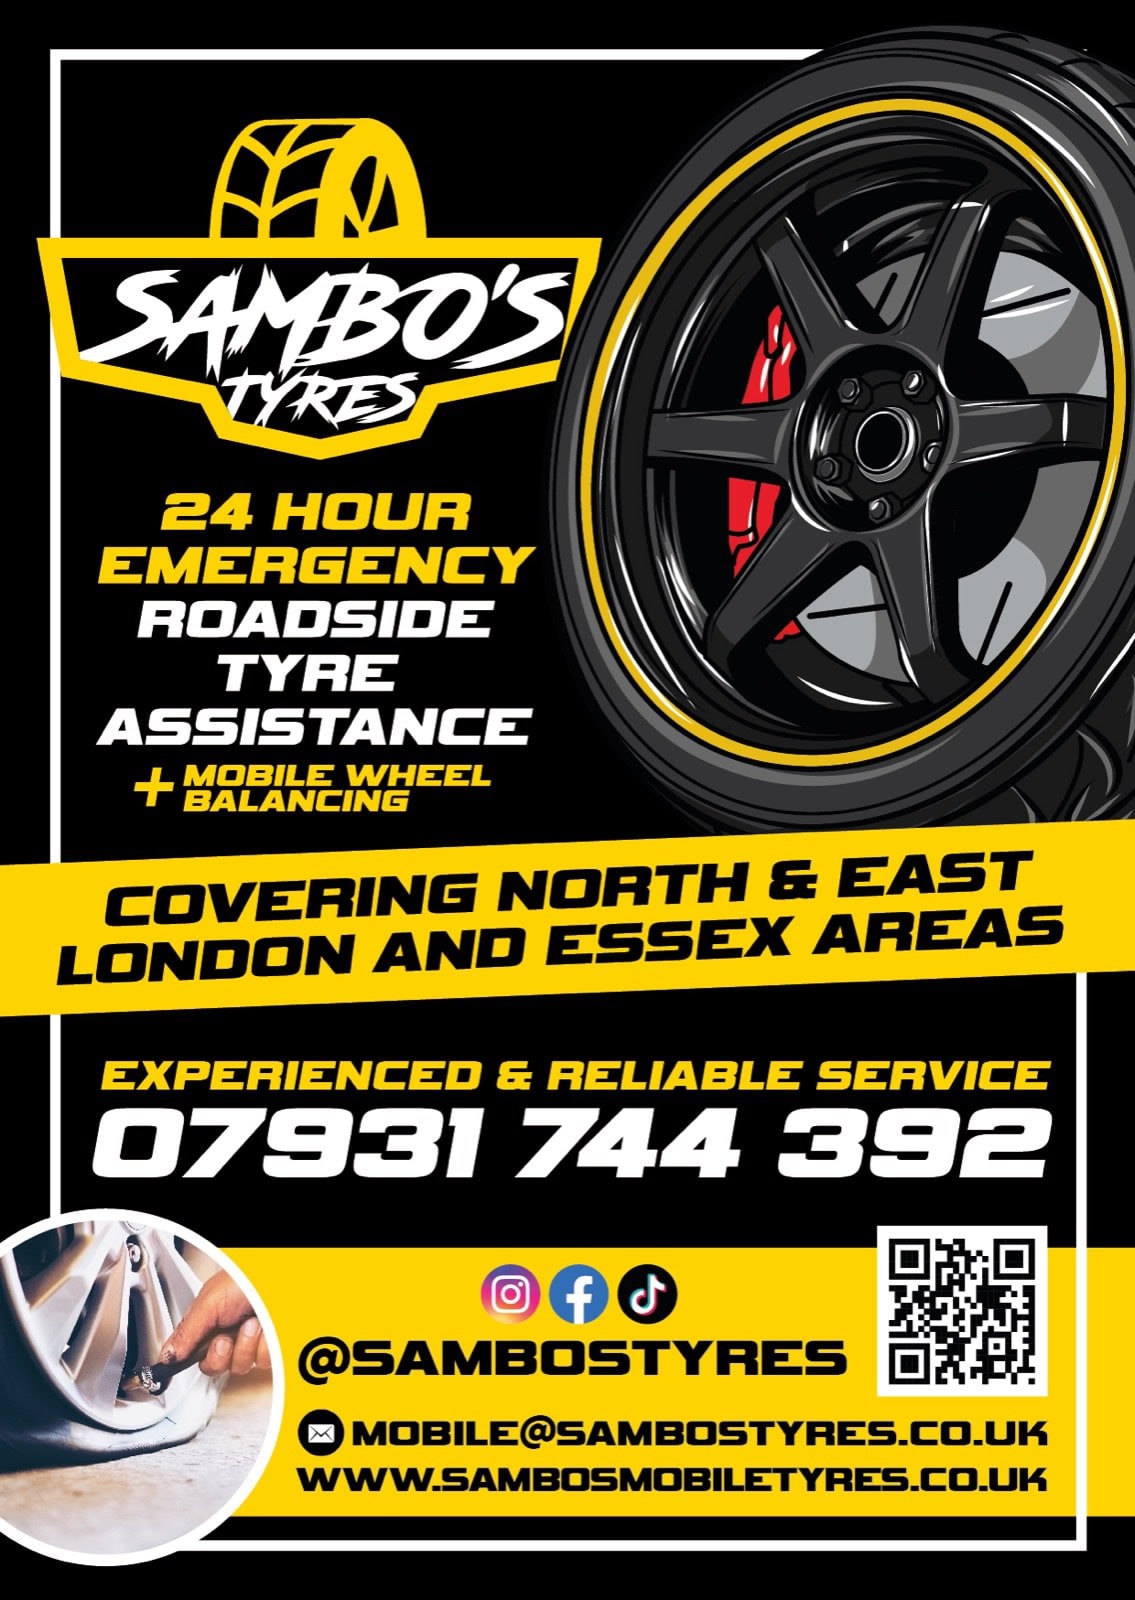 Mobile Tyres 247 Ltd London 07931 744392